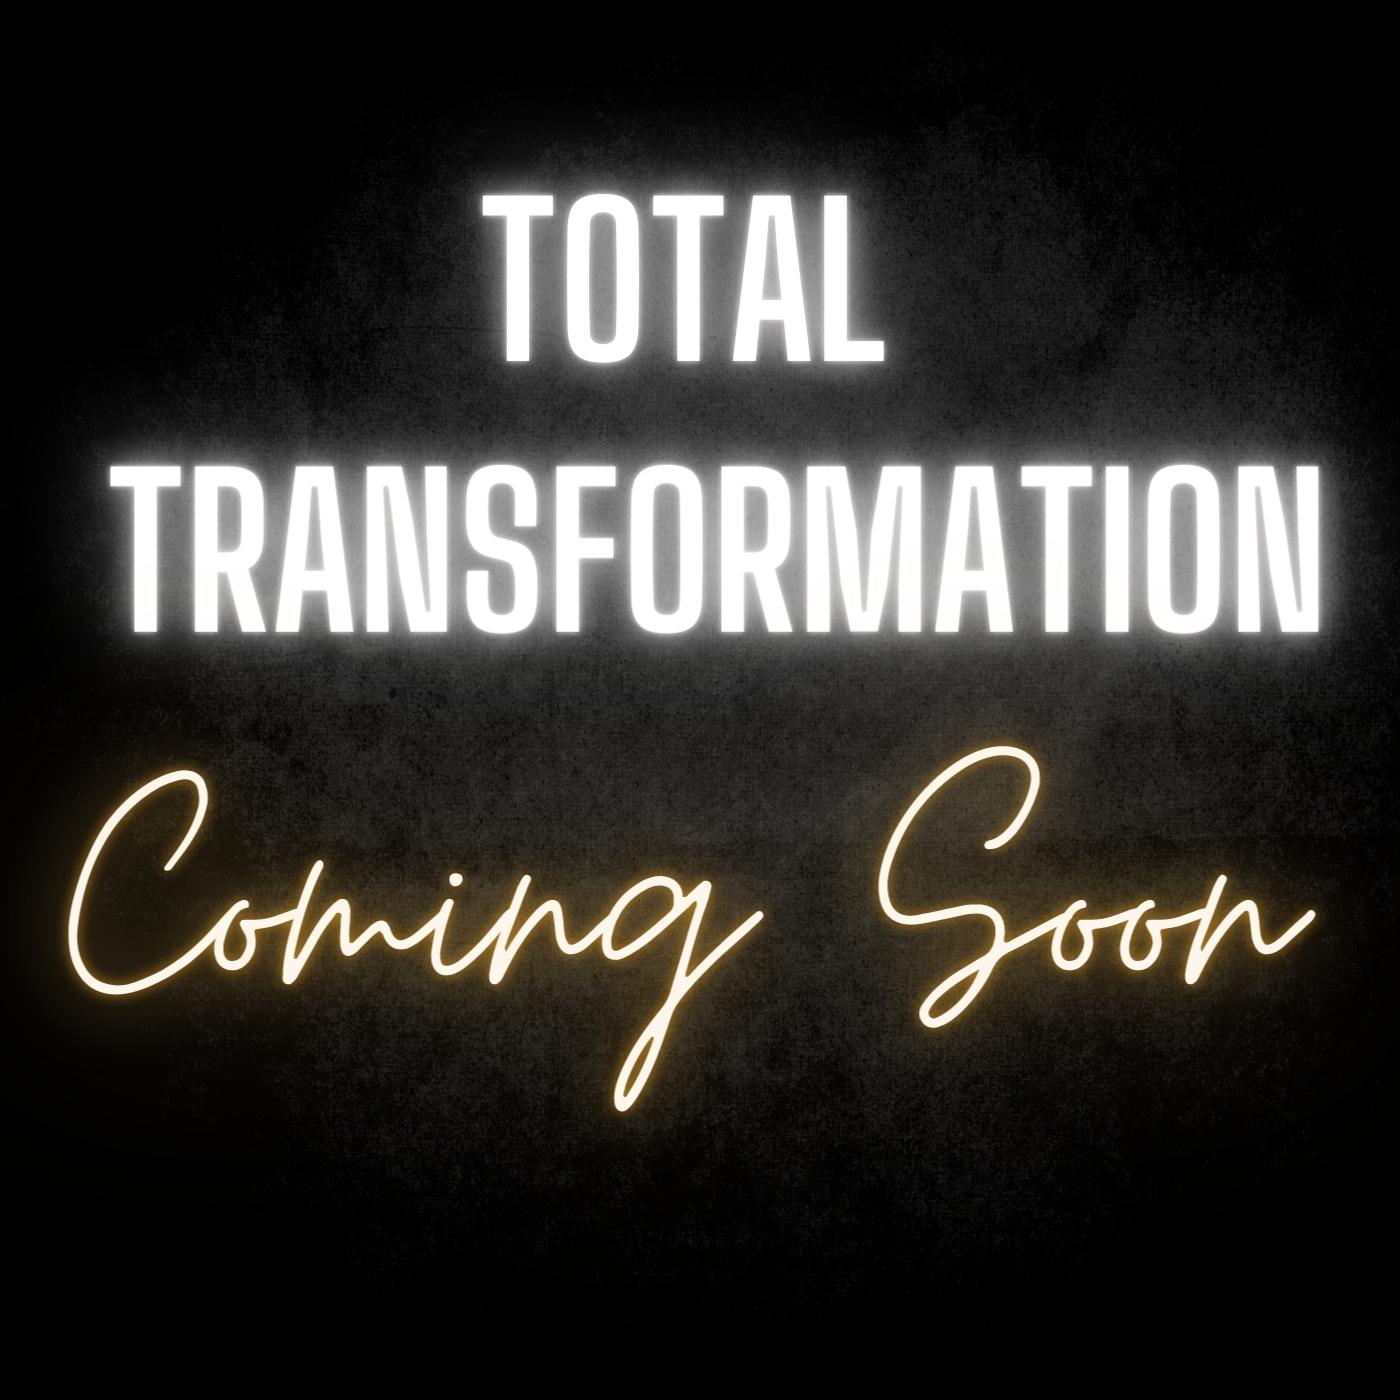 Total Transformation Program